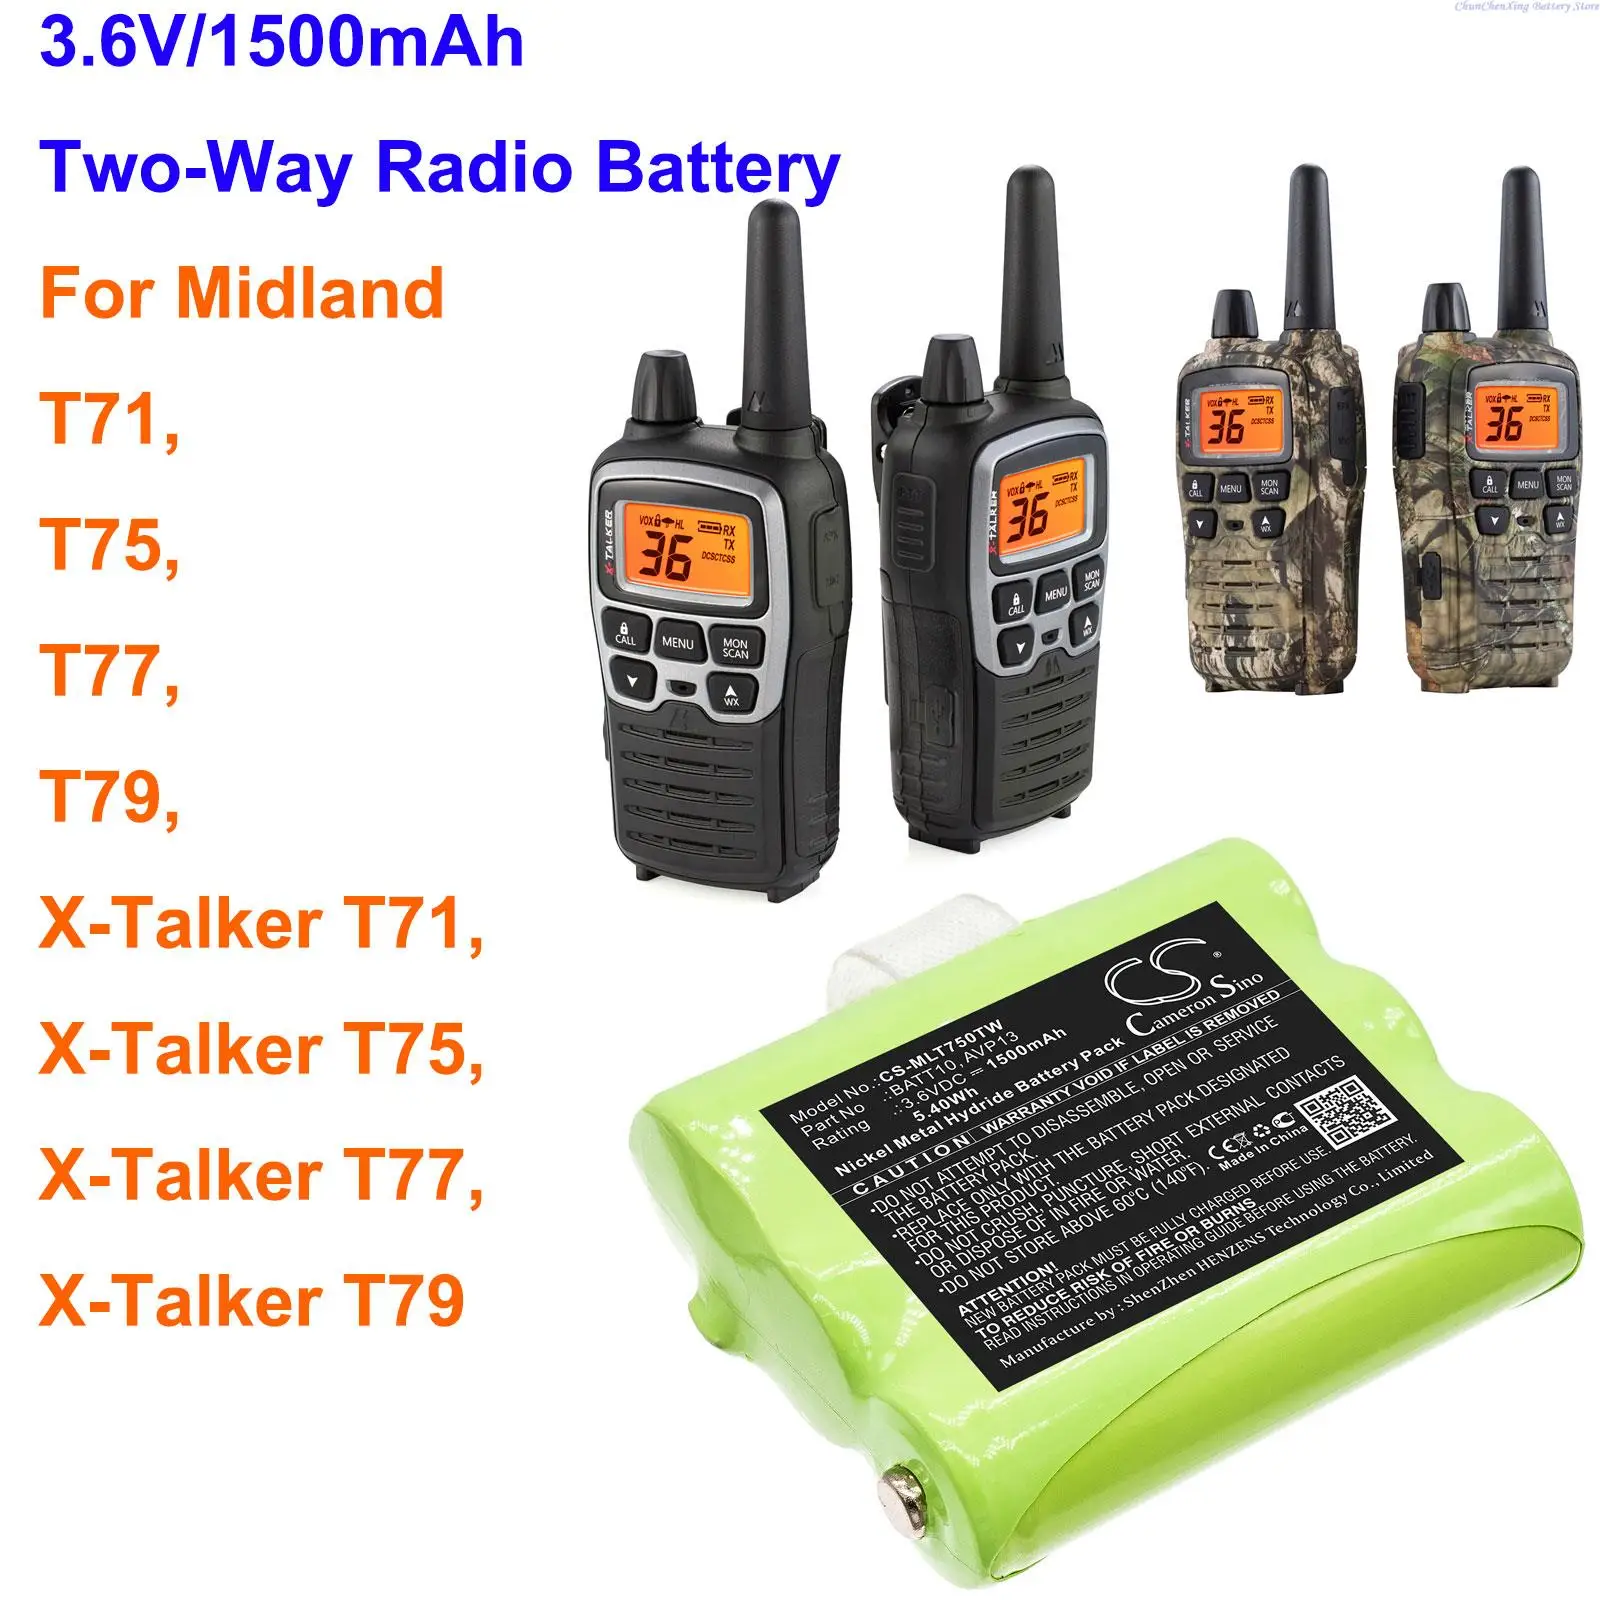 

1500mAh Two-Way Radio Battery BATT10, AVP13 for Midland X-Talker T71, X-Talker T75, X-Talker T77, X-Talker T79